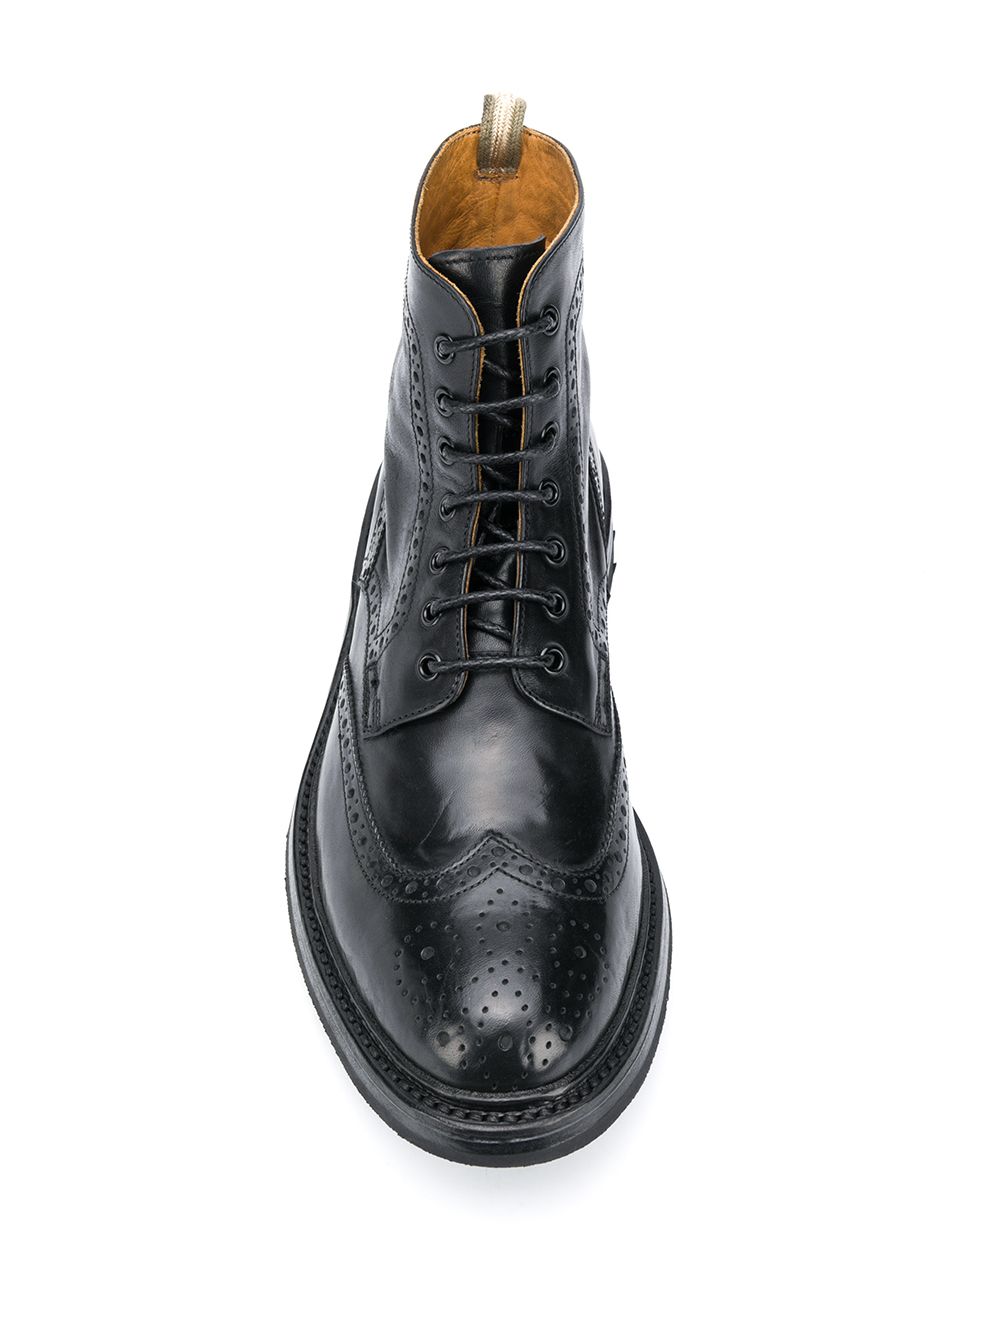 фото Officine creative глянцевые ботинки на шнуровке